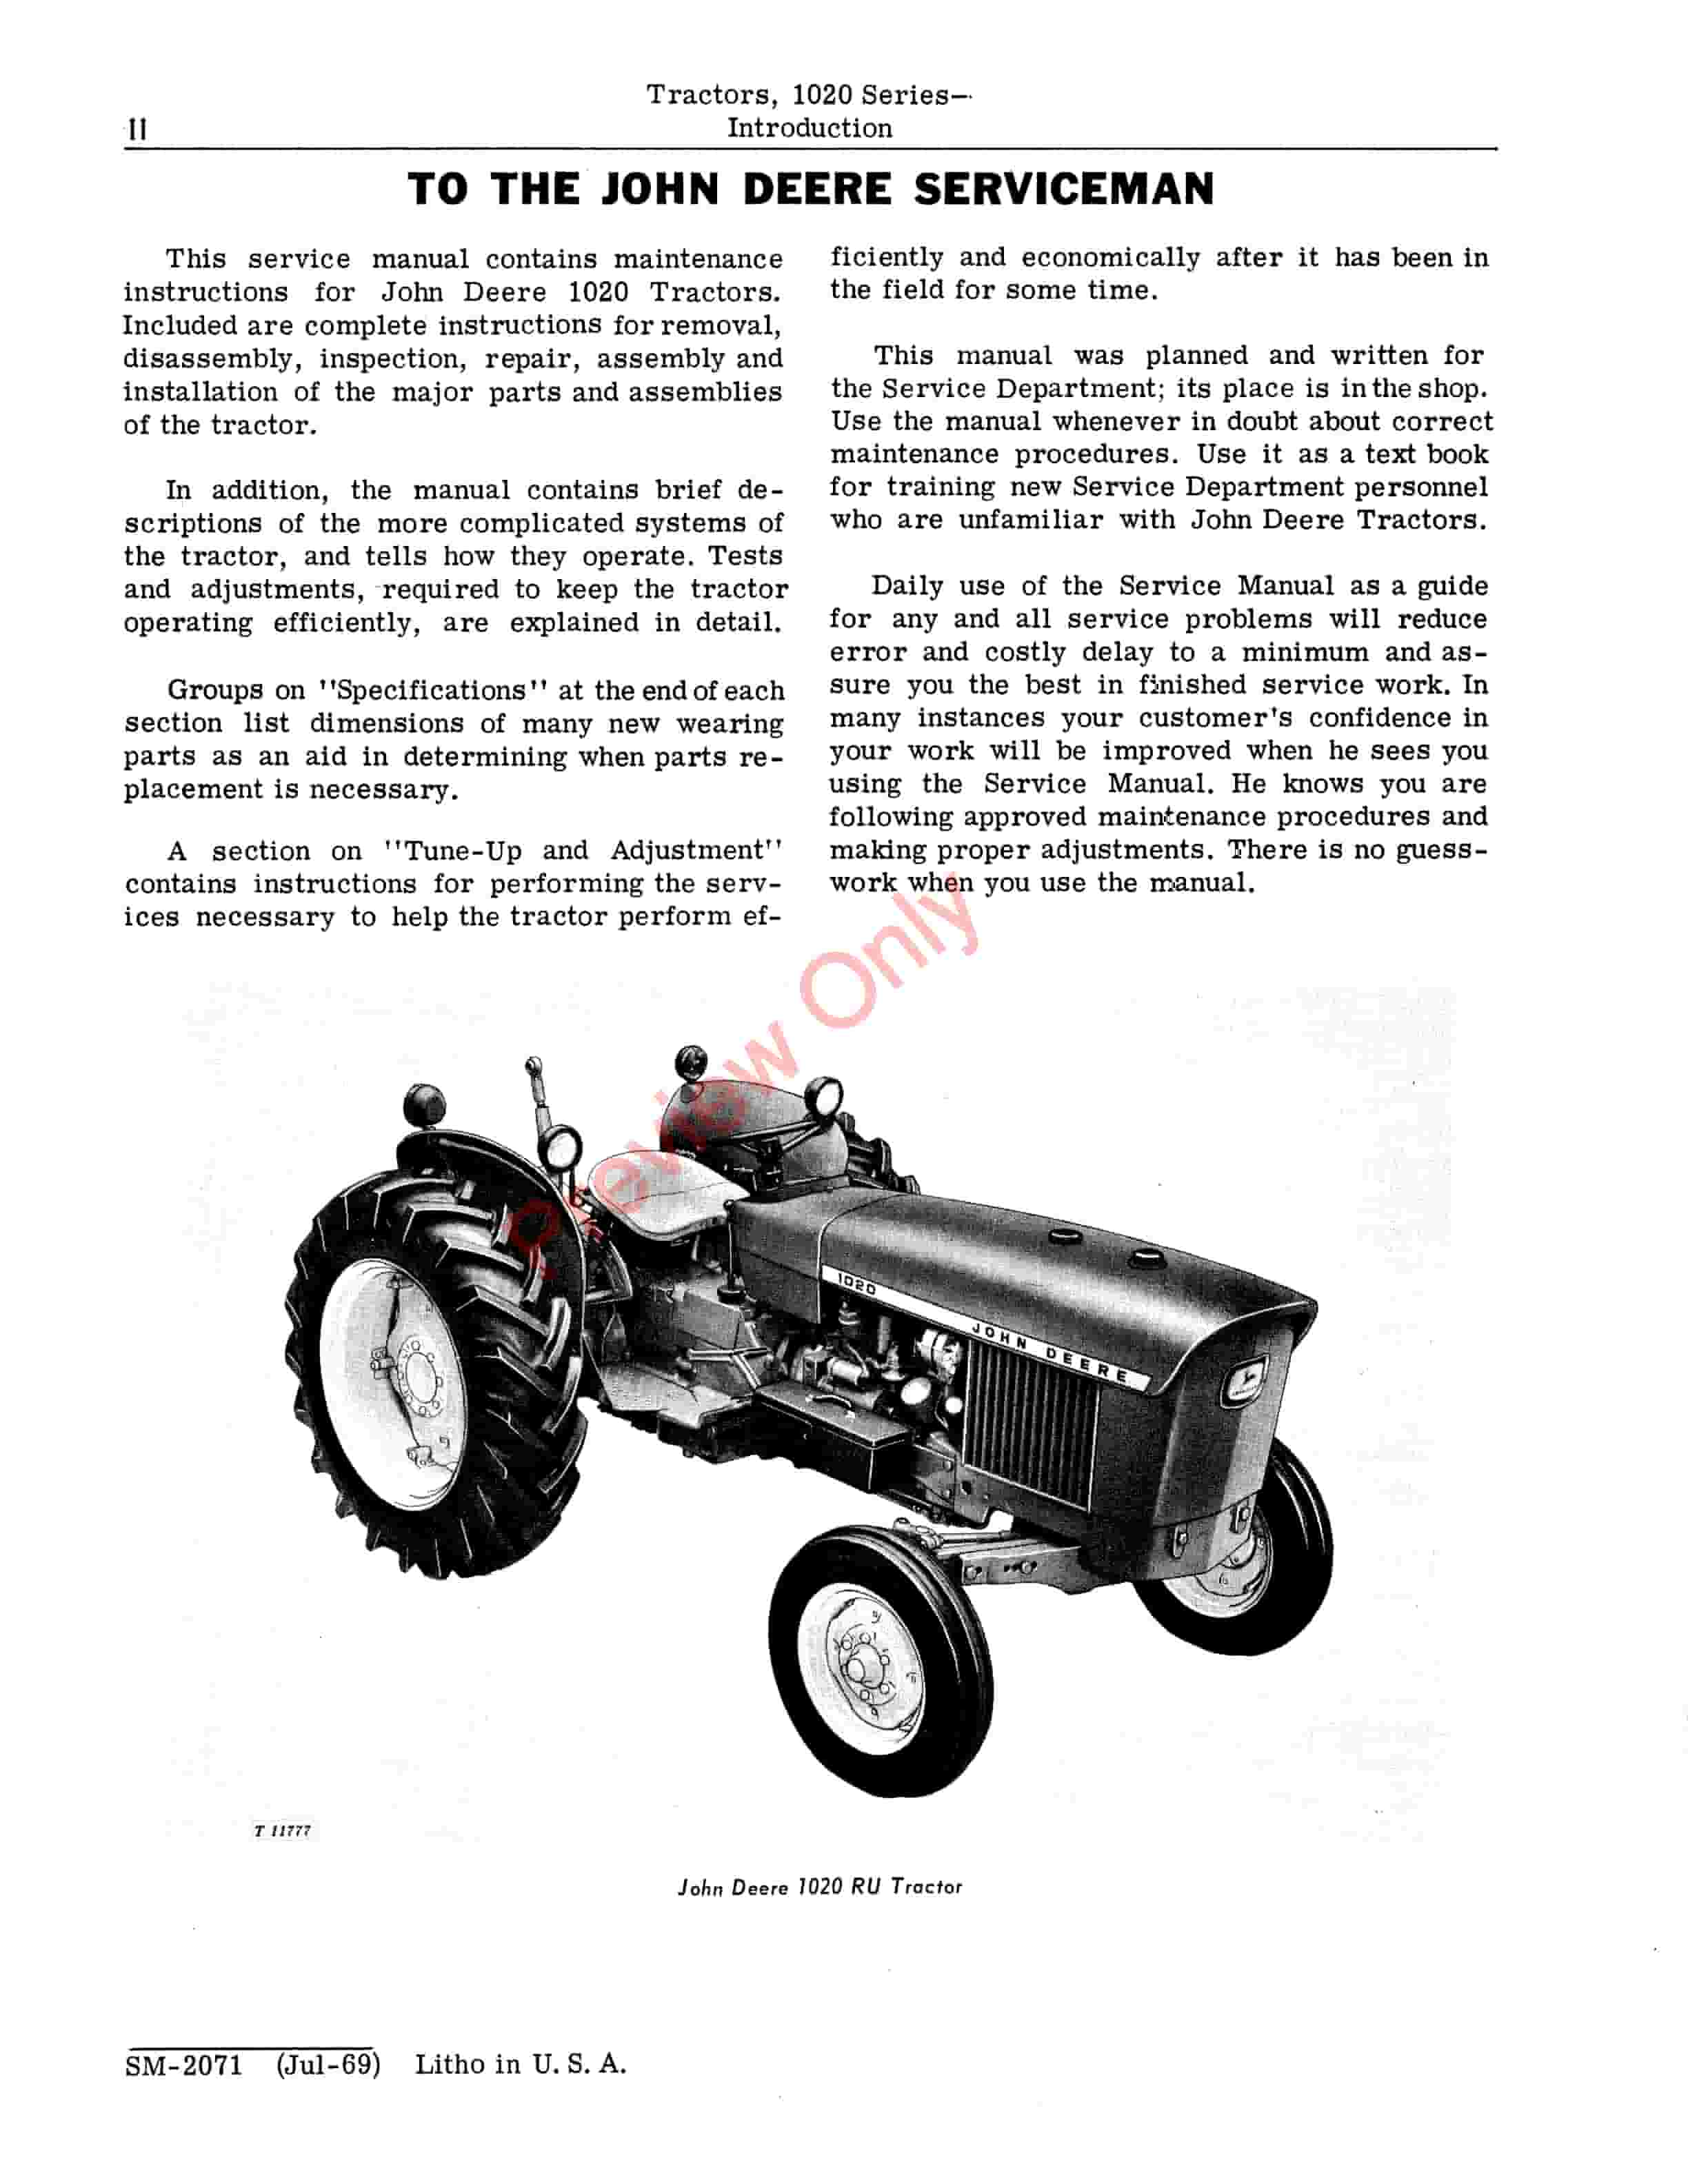 John Deere 1020 Series Tractors Service Manual SM2071 01JUL69 4